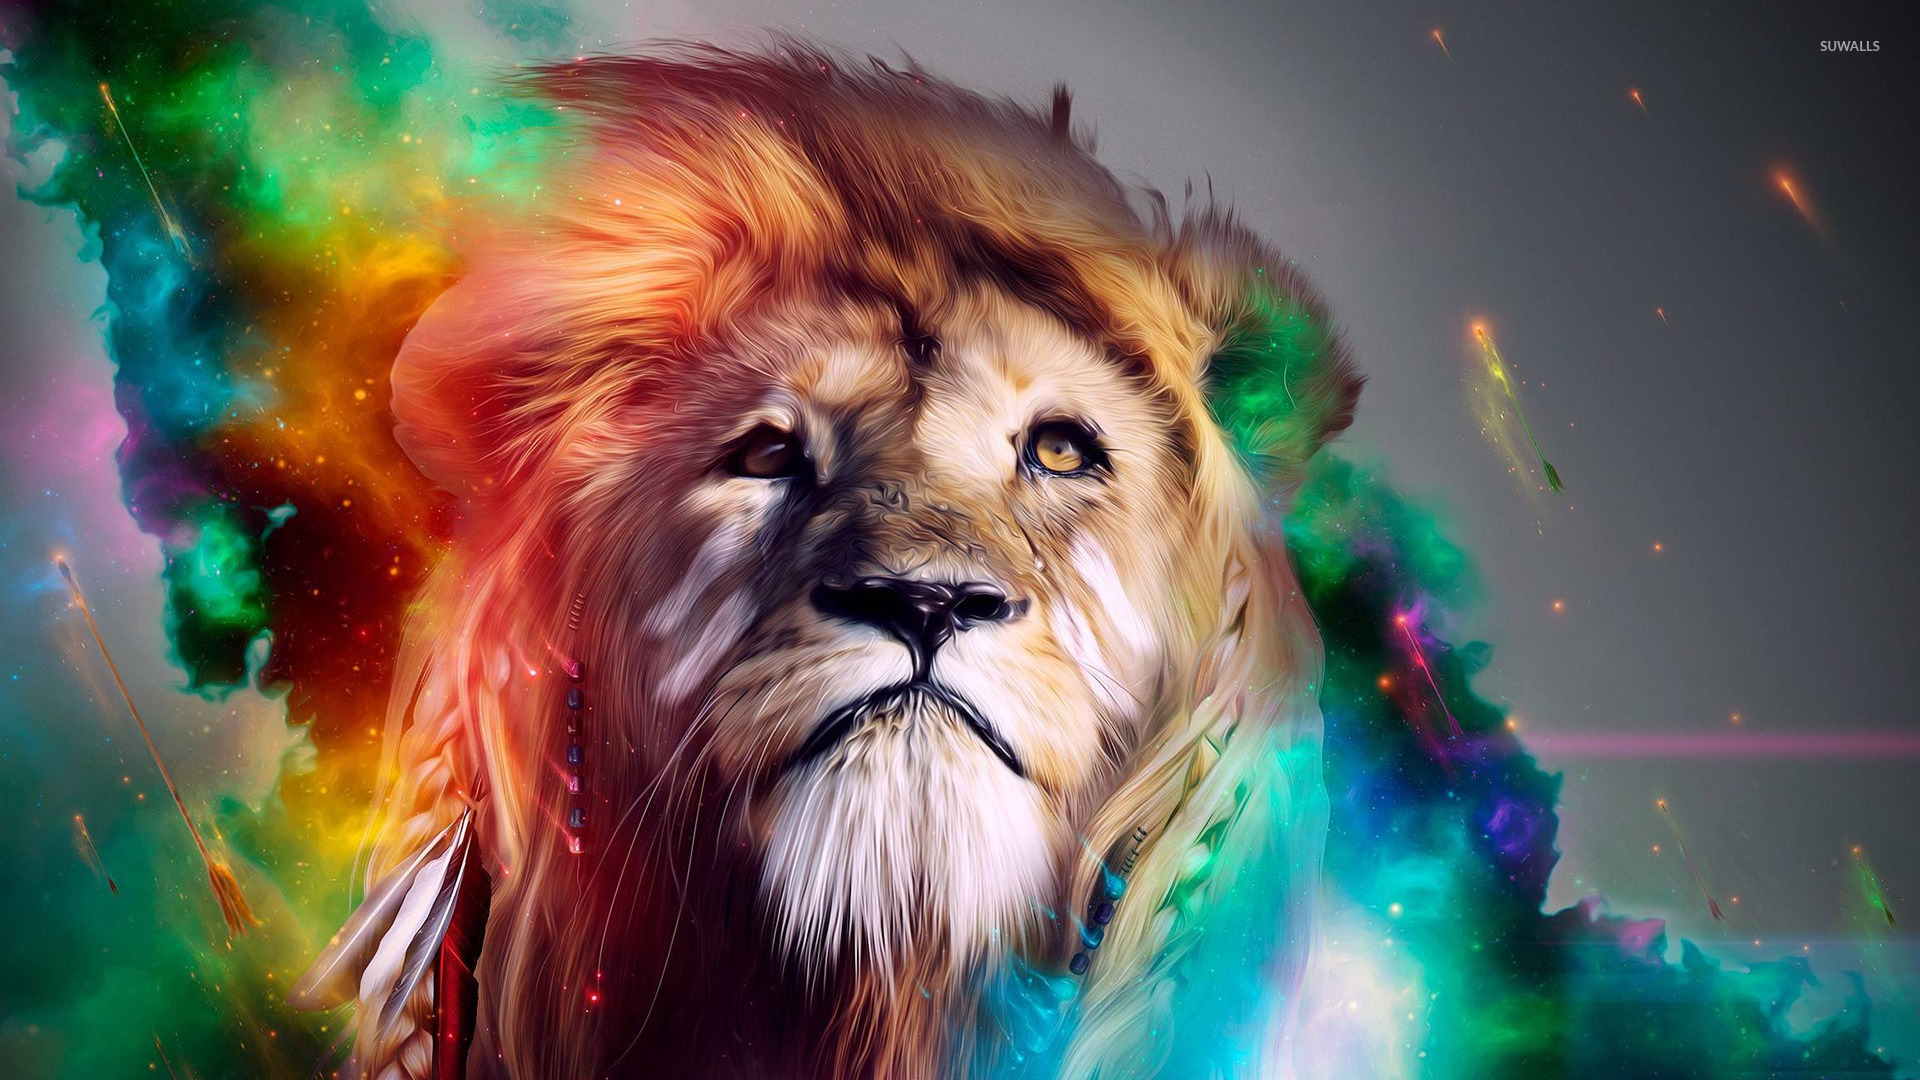 Colorful Lion Wallpaper Digital Art